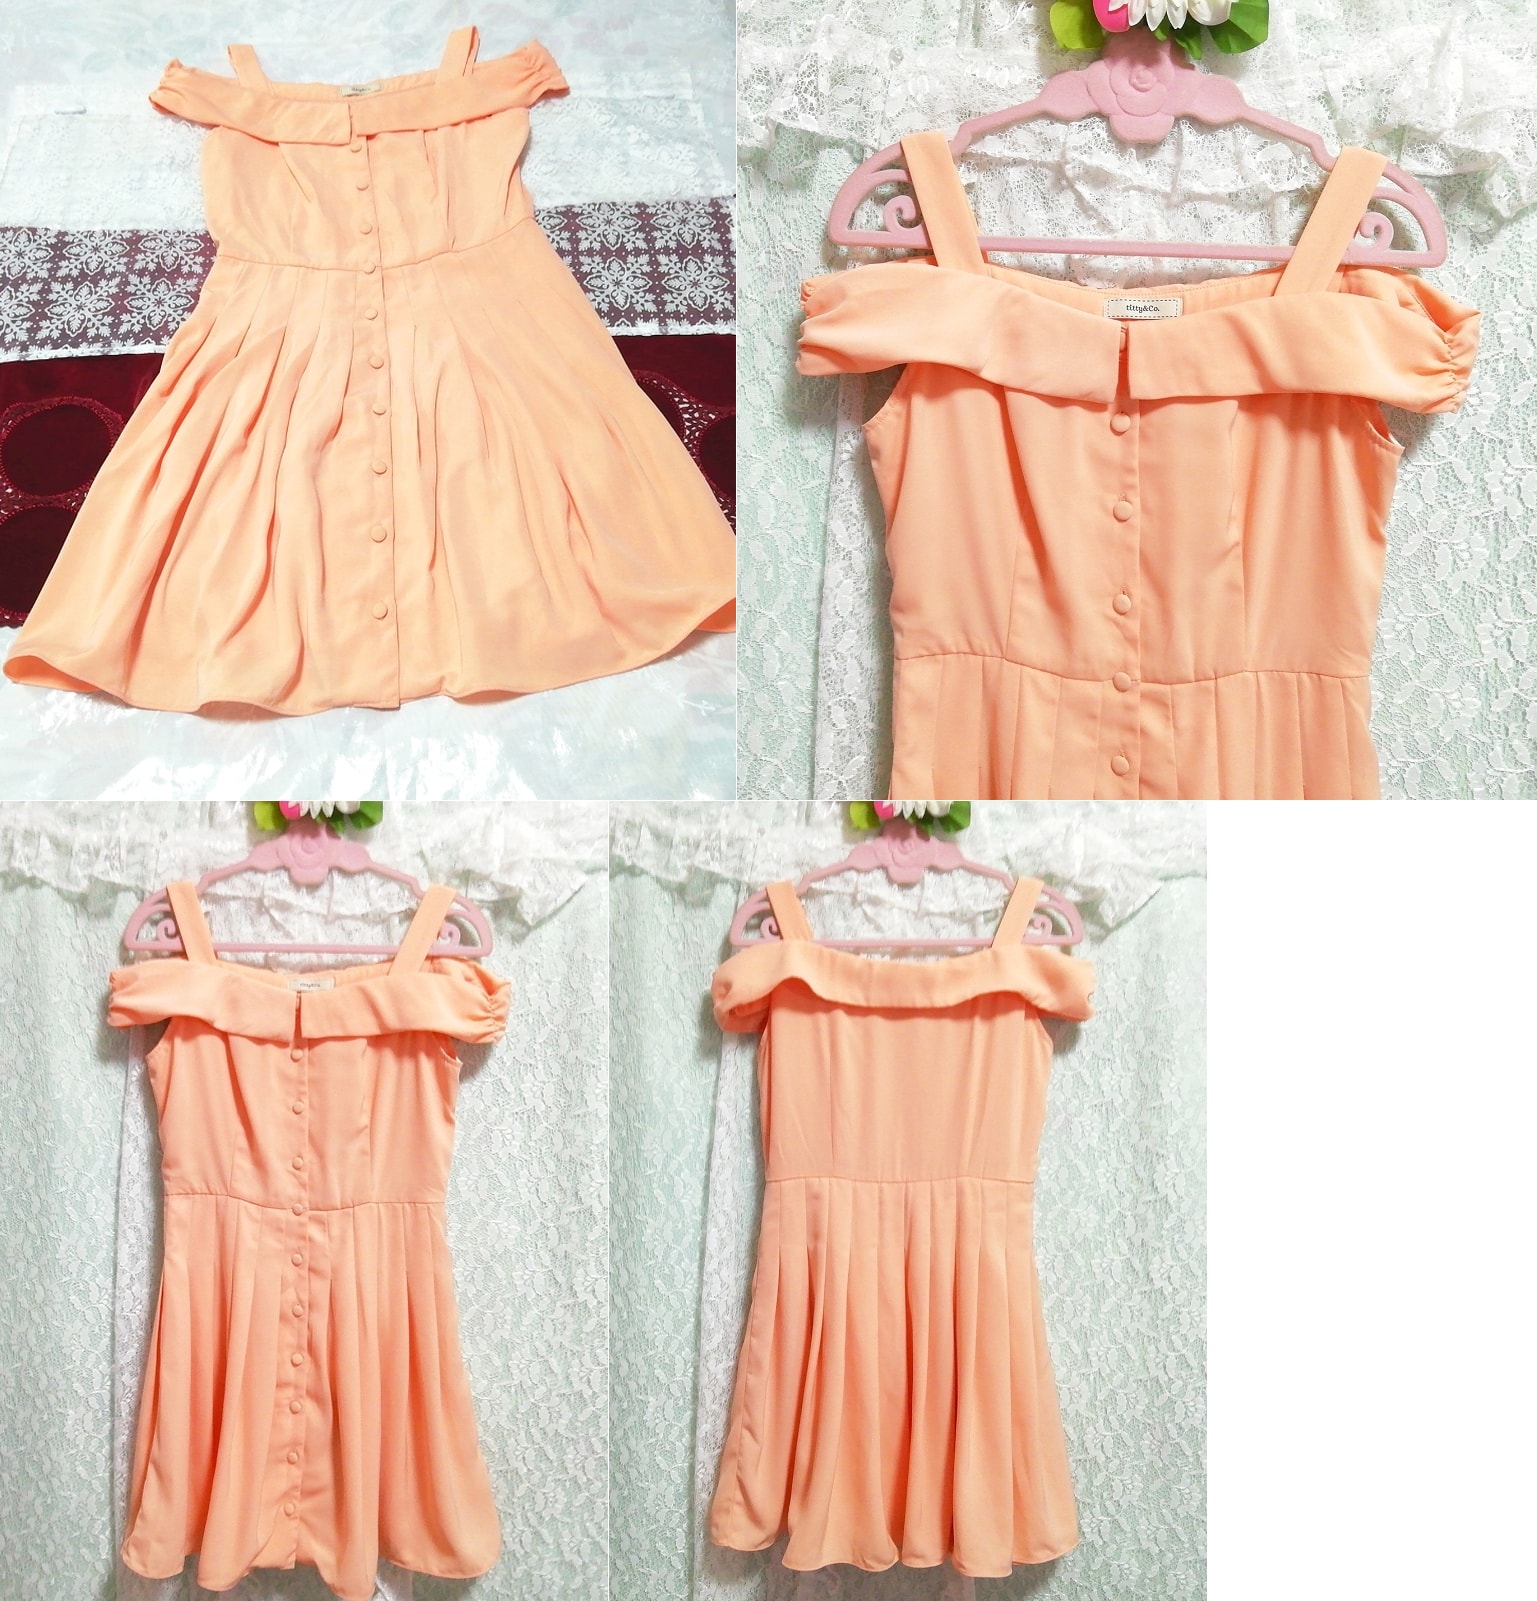 Light orange sleeveless negligee nightgown camisole mini dress, mini skirt, m size